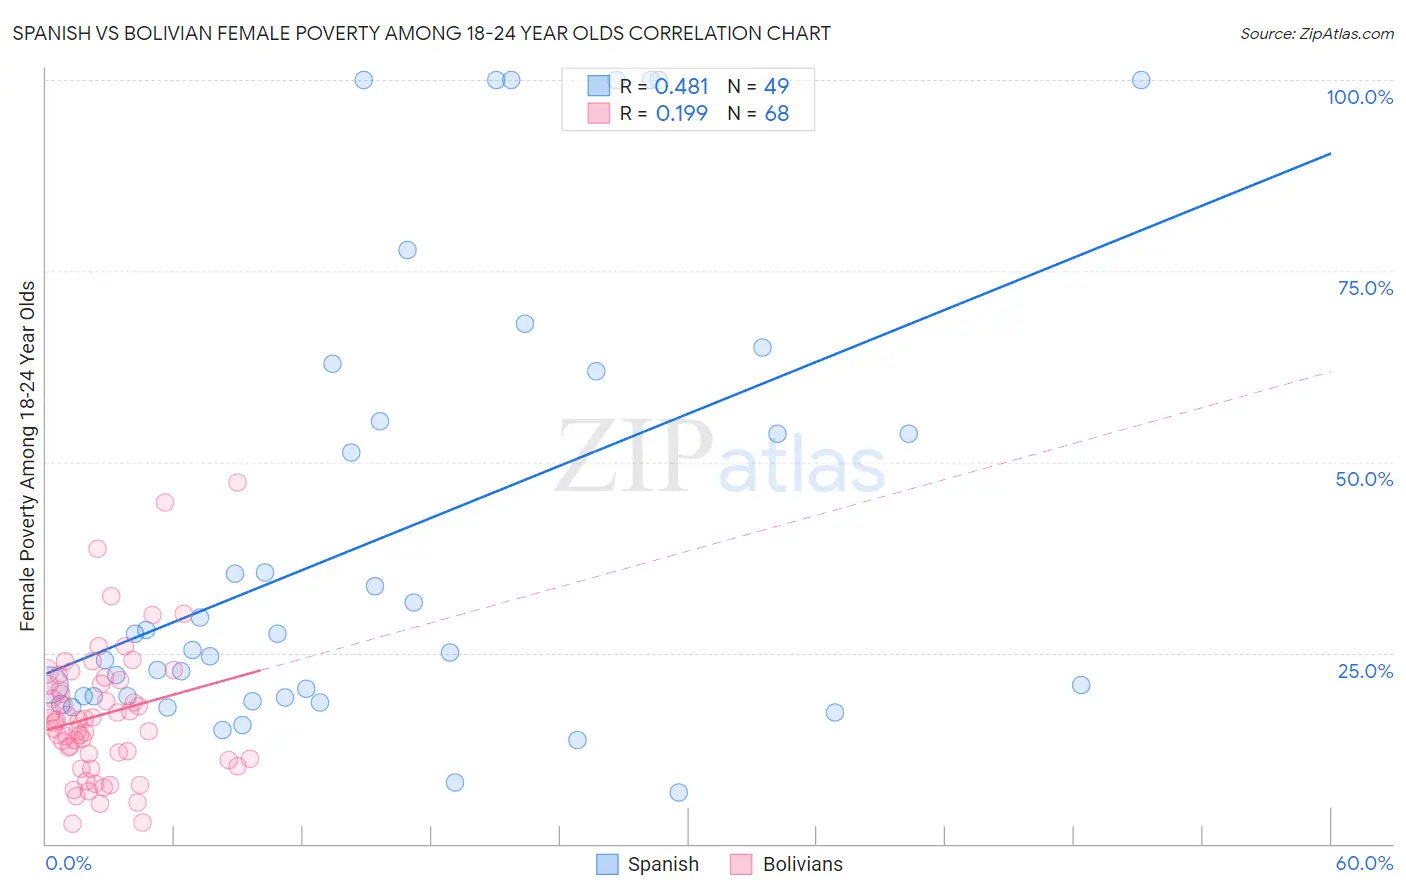 Spanish vs Bolivian Female Poverty Among 18-24 Year Olds